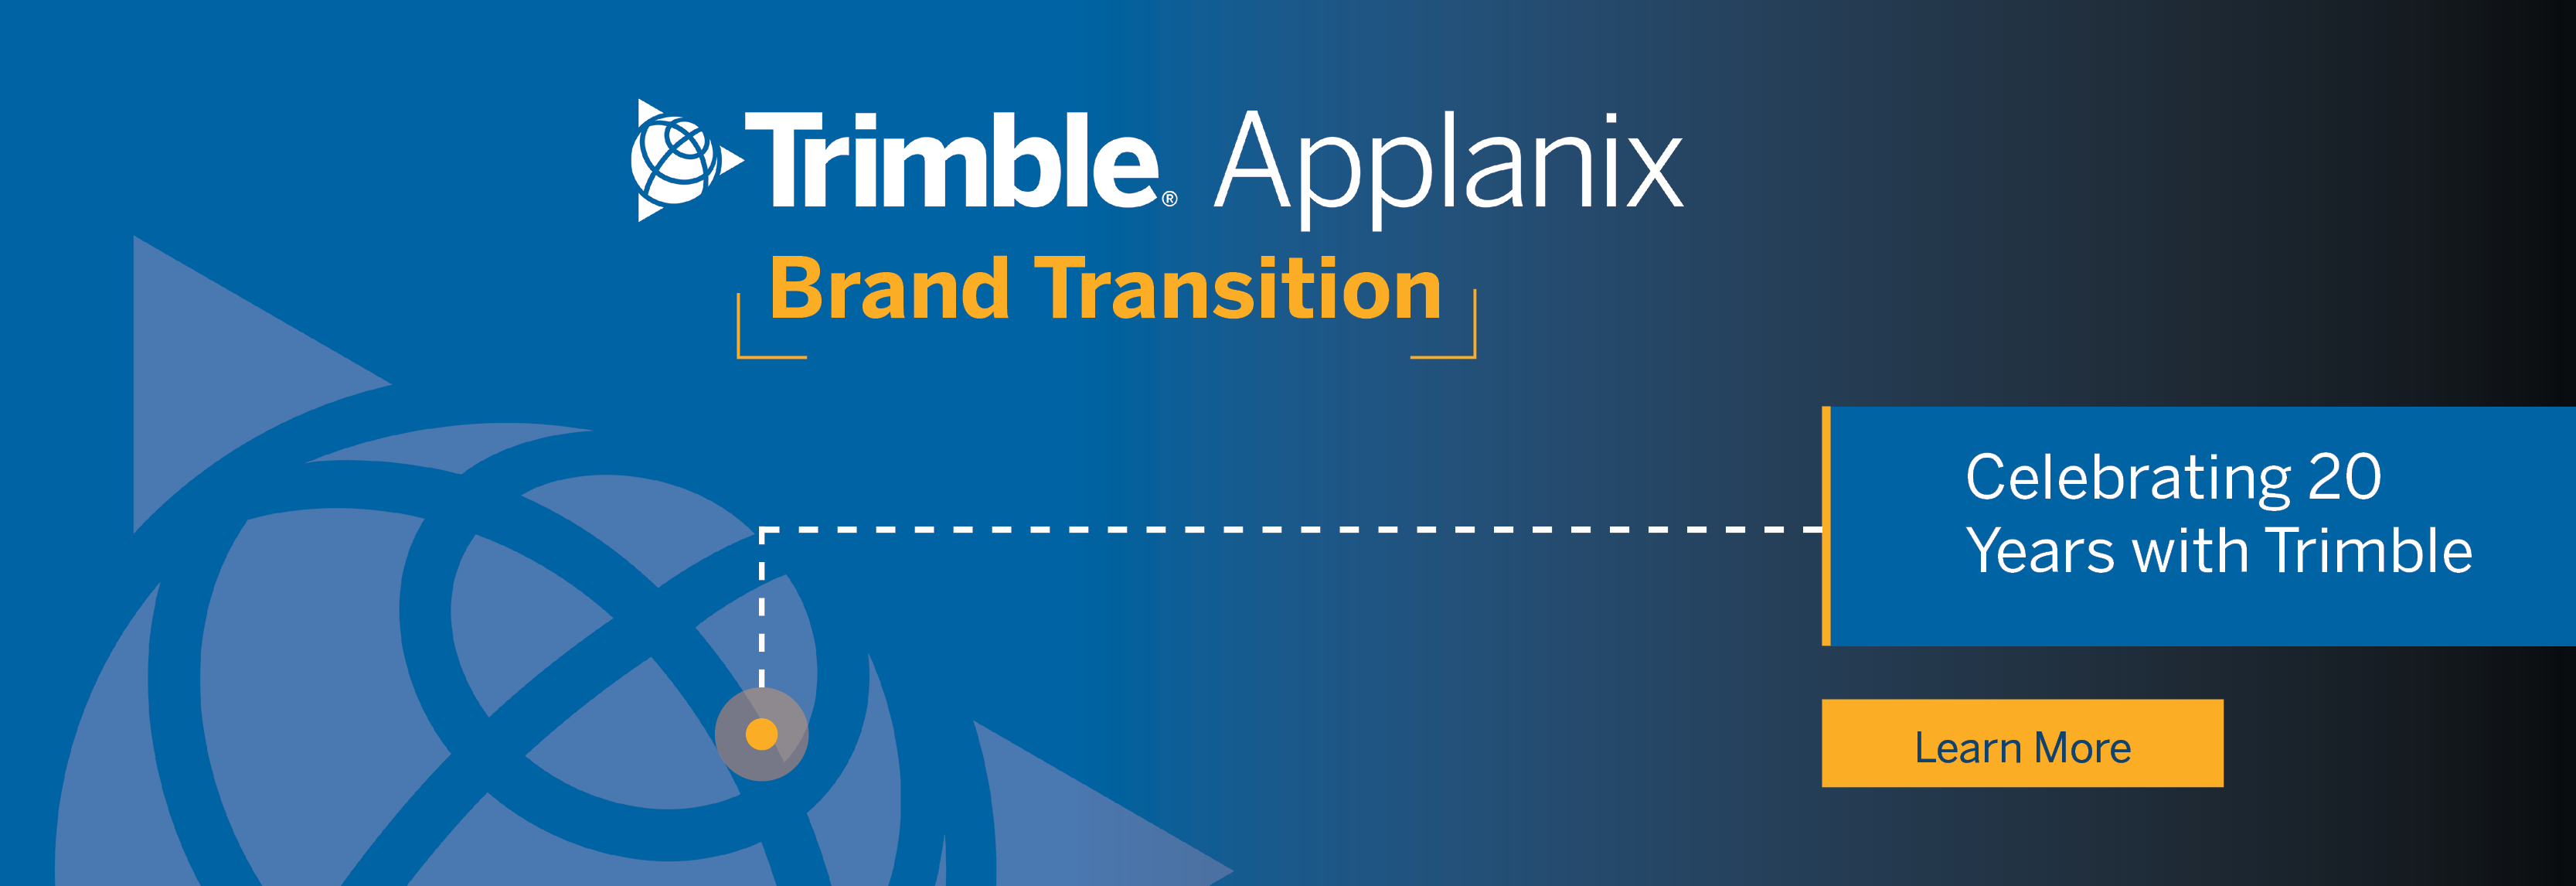 Trimble Applanix Brand Transition